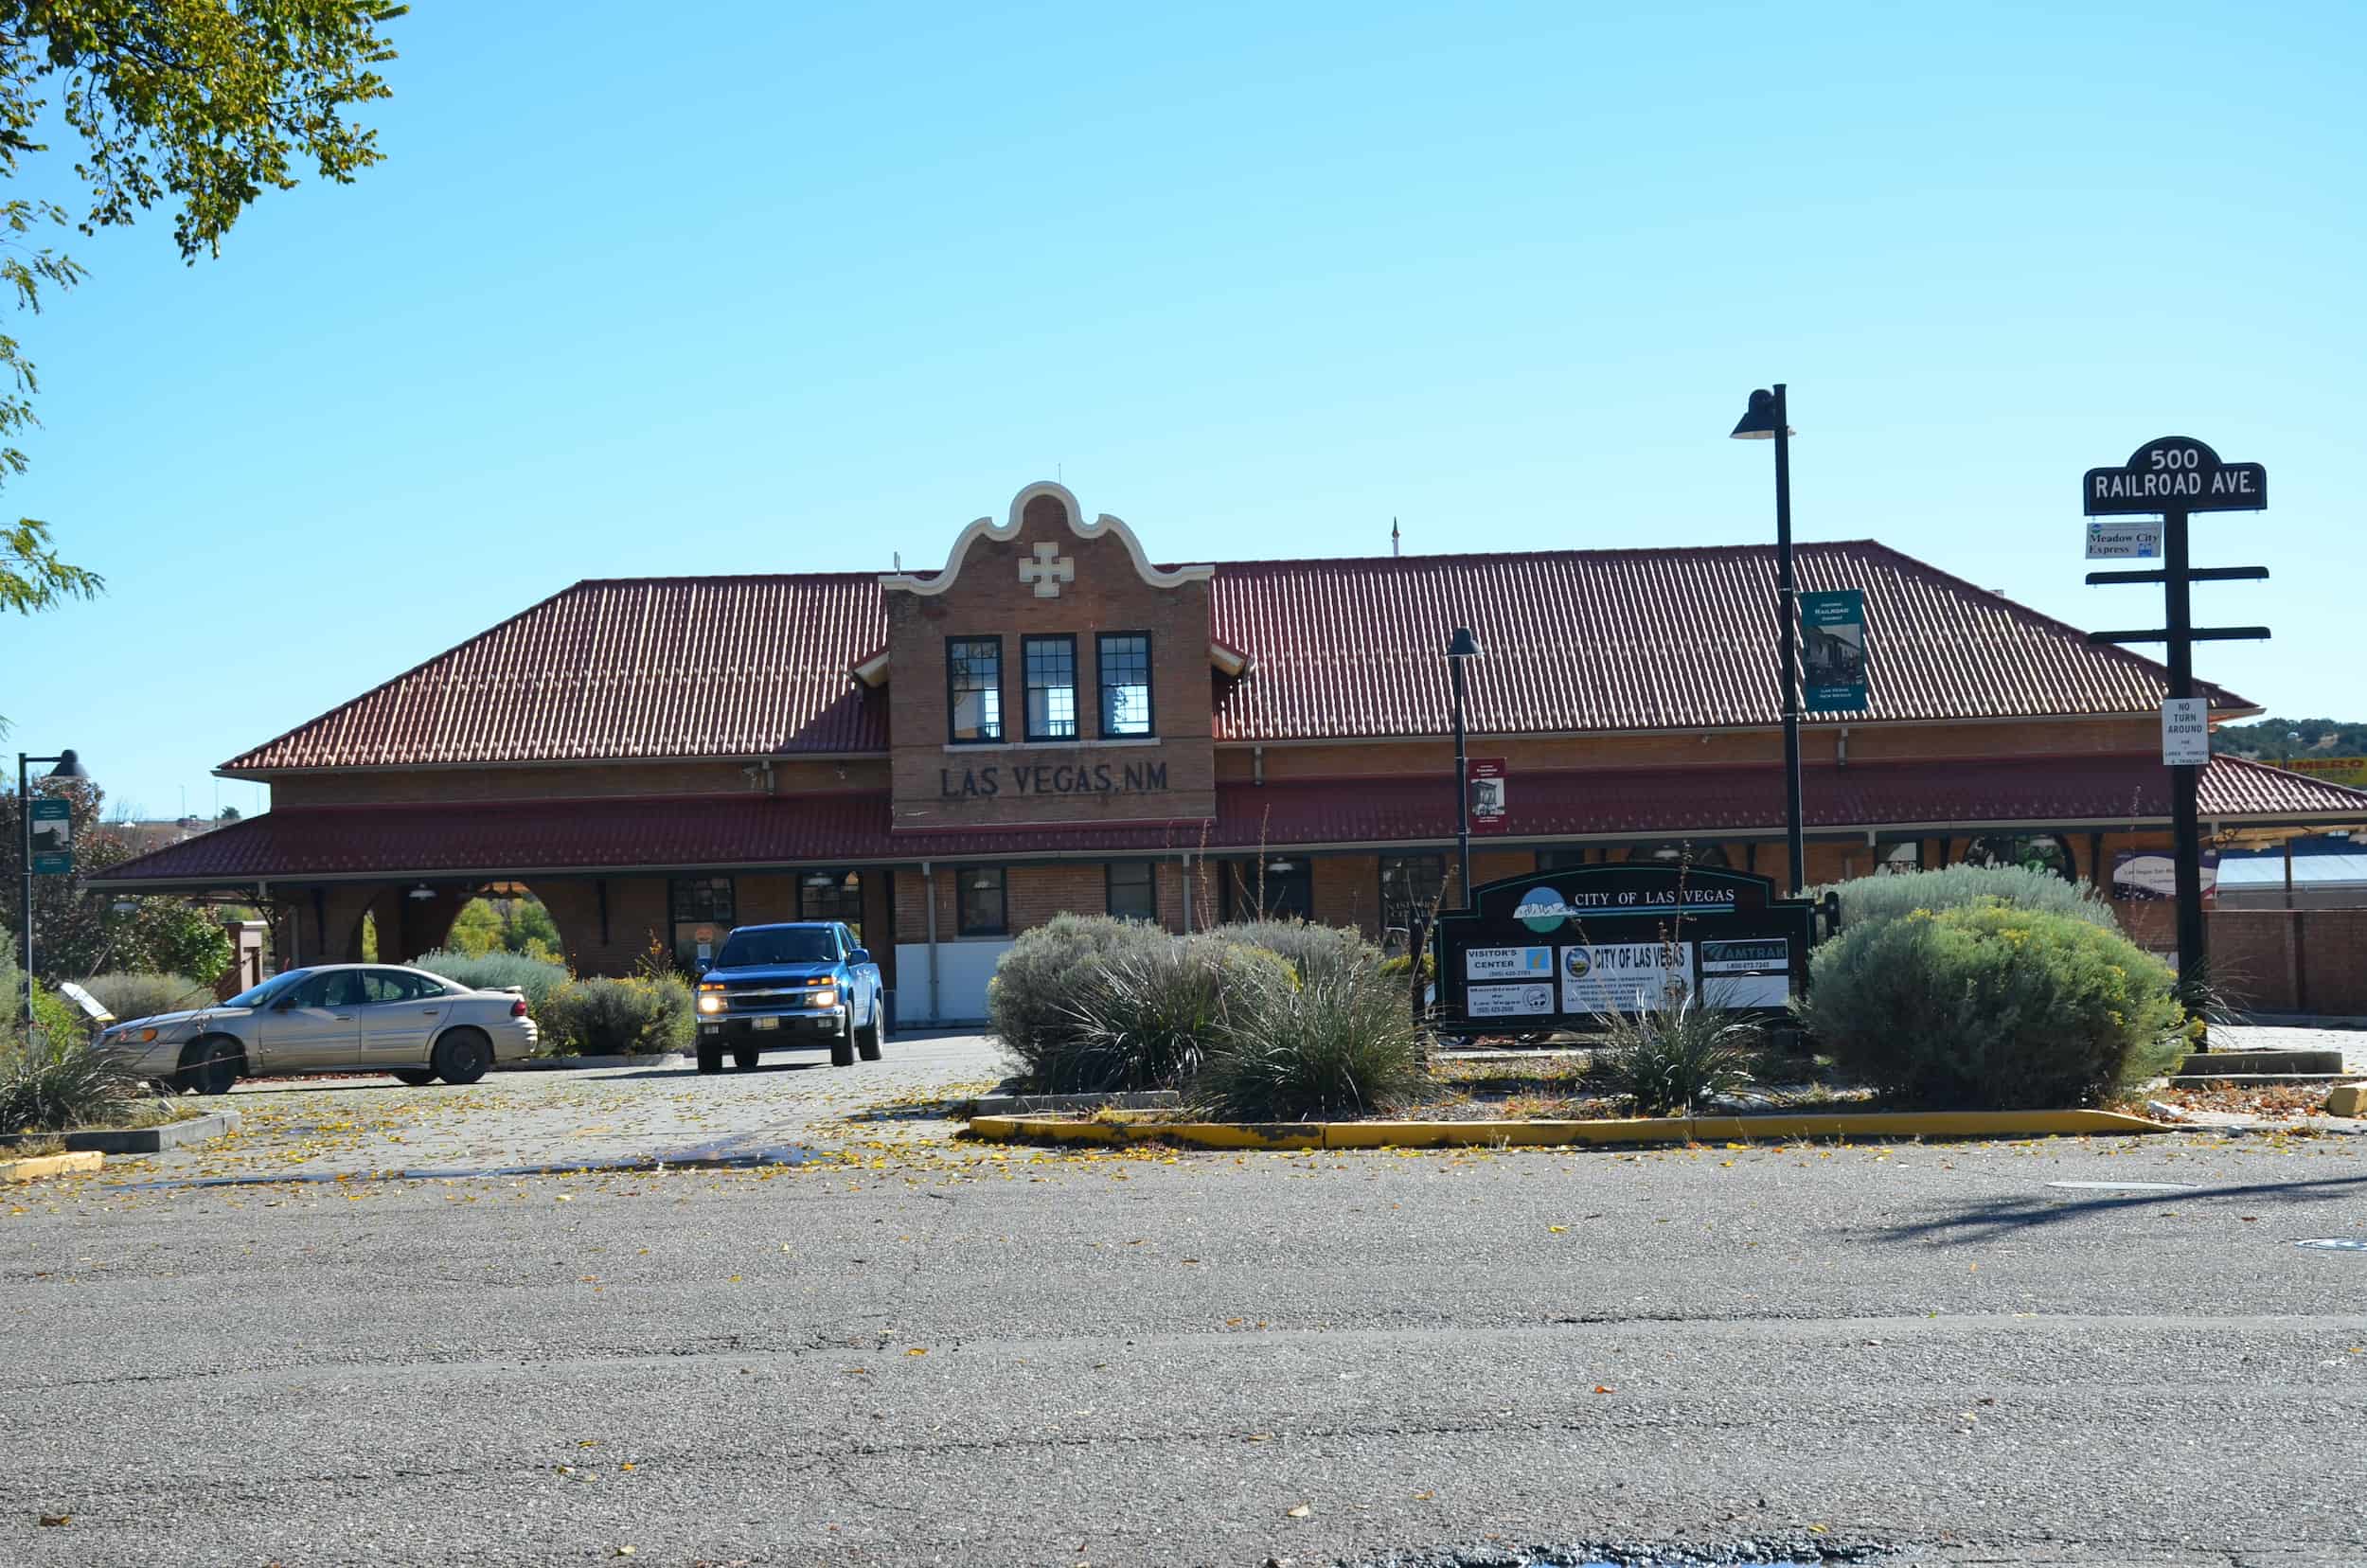 Las Vegas Depot in Las Vegas, New Mexico